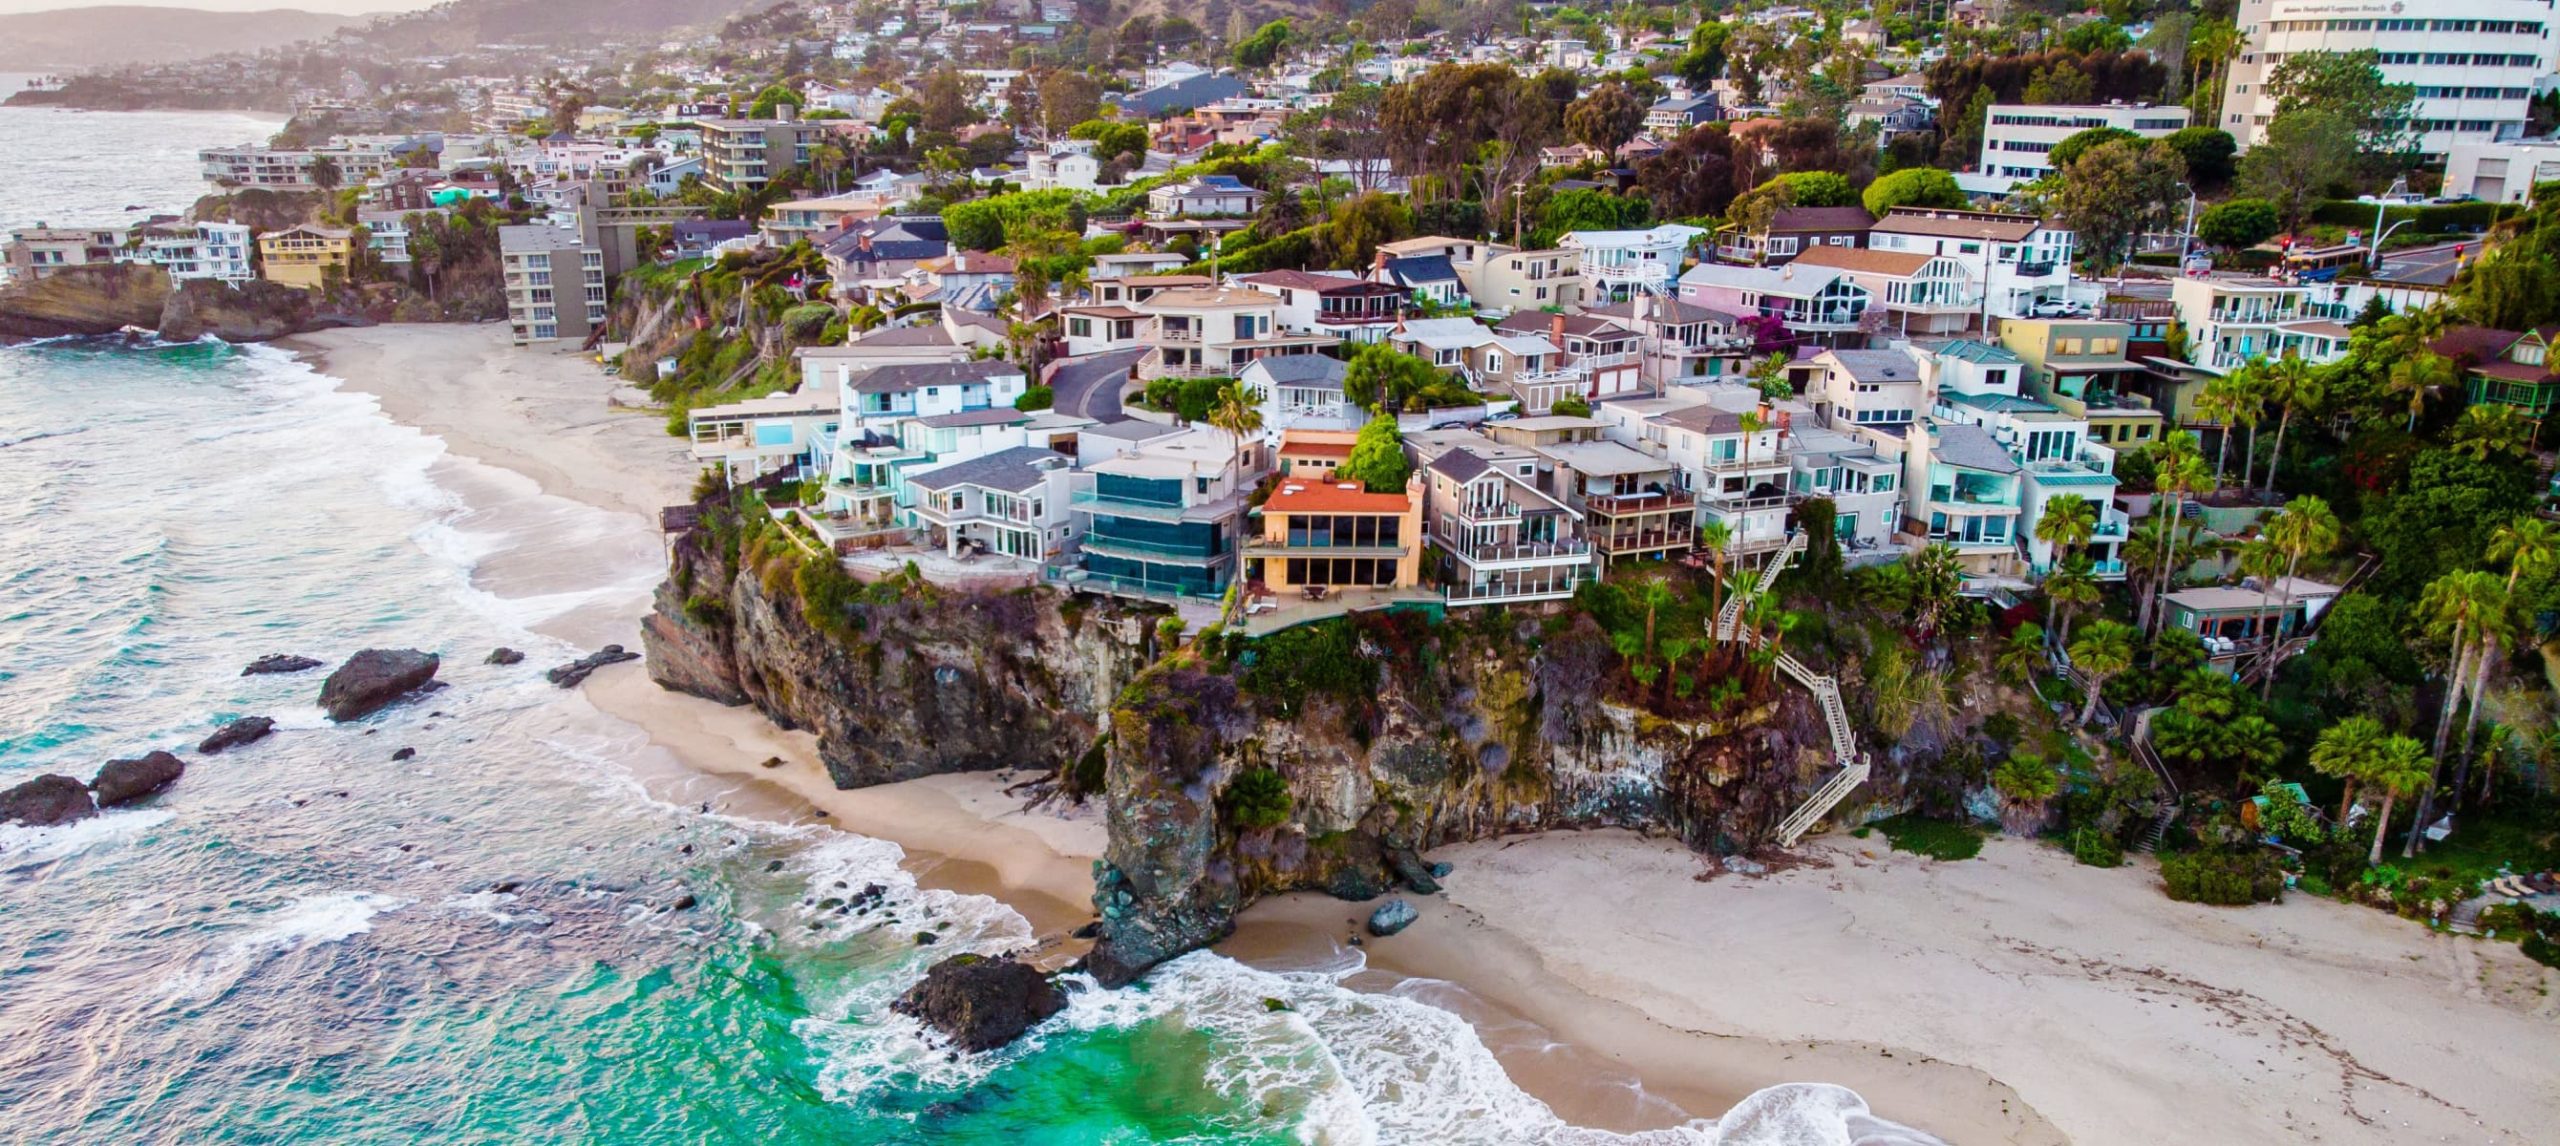 The 8 Most Amazing Laguna Beach Hotels